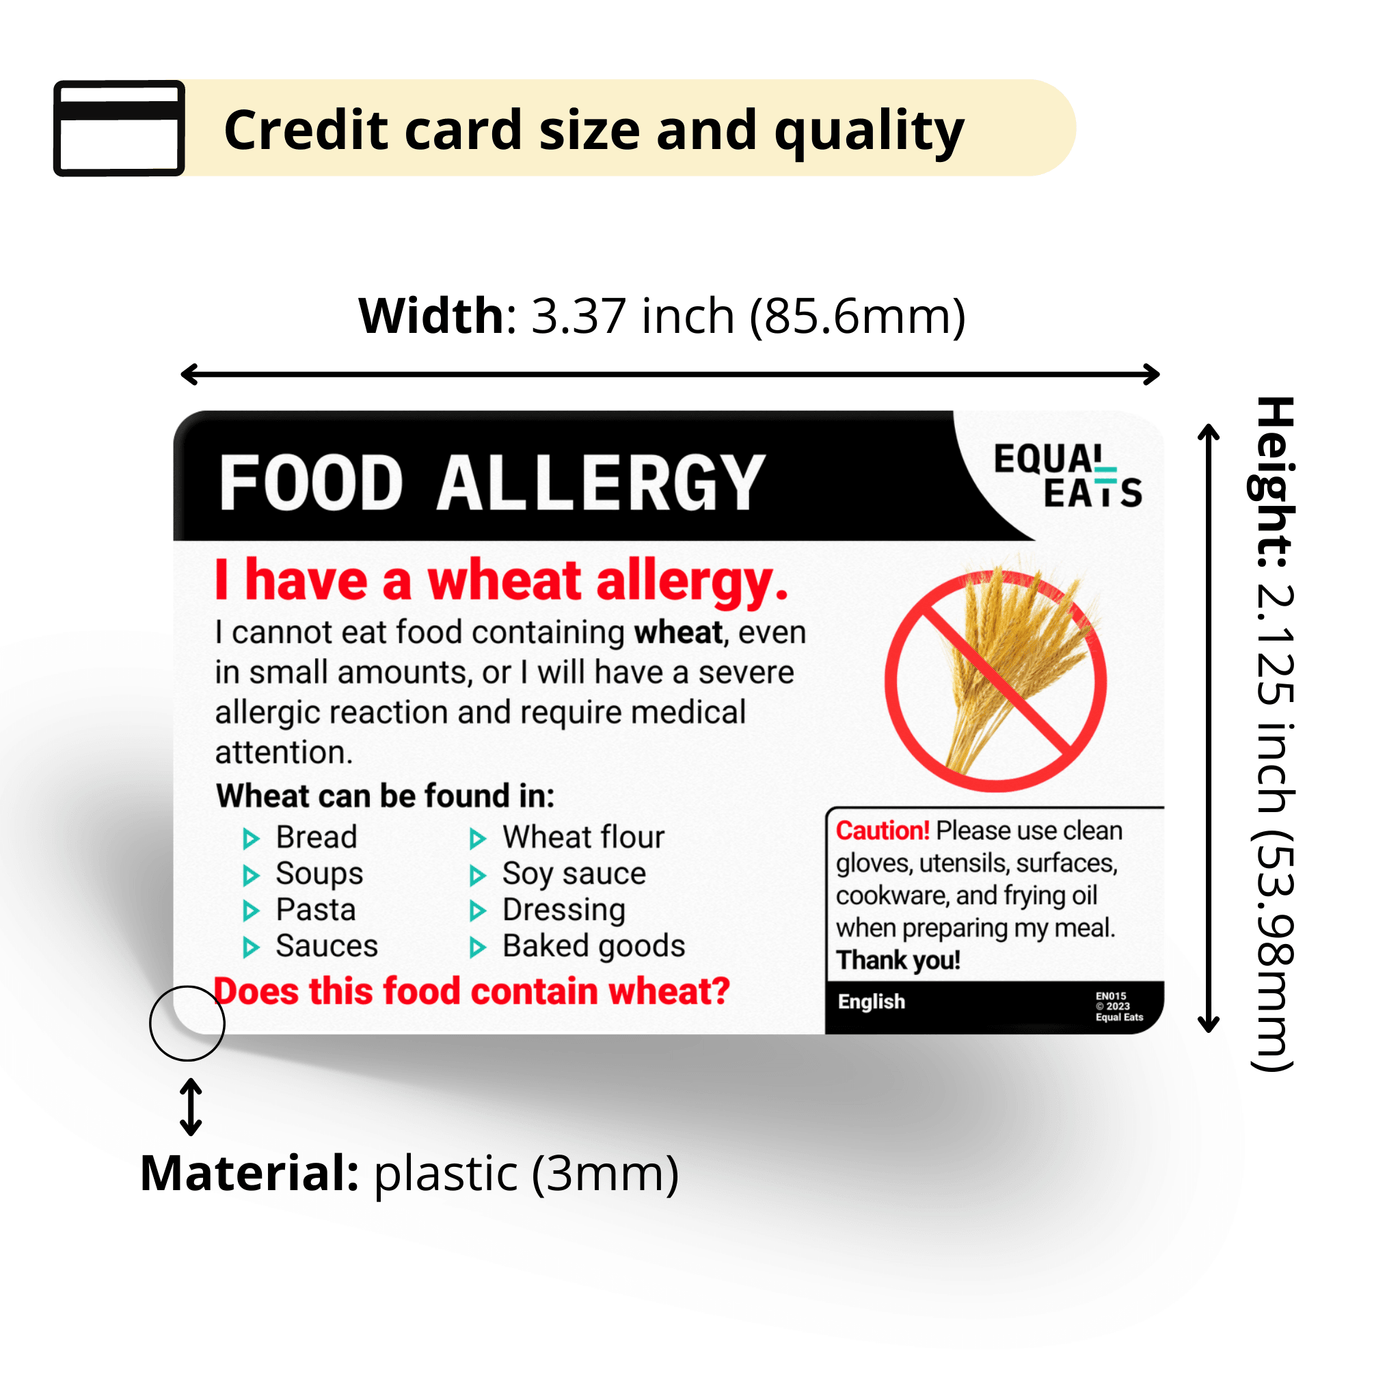 Lao Wheat Allergy Card